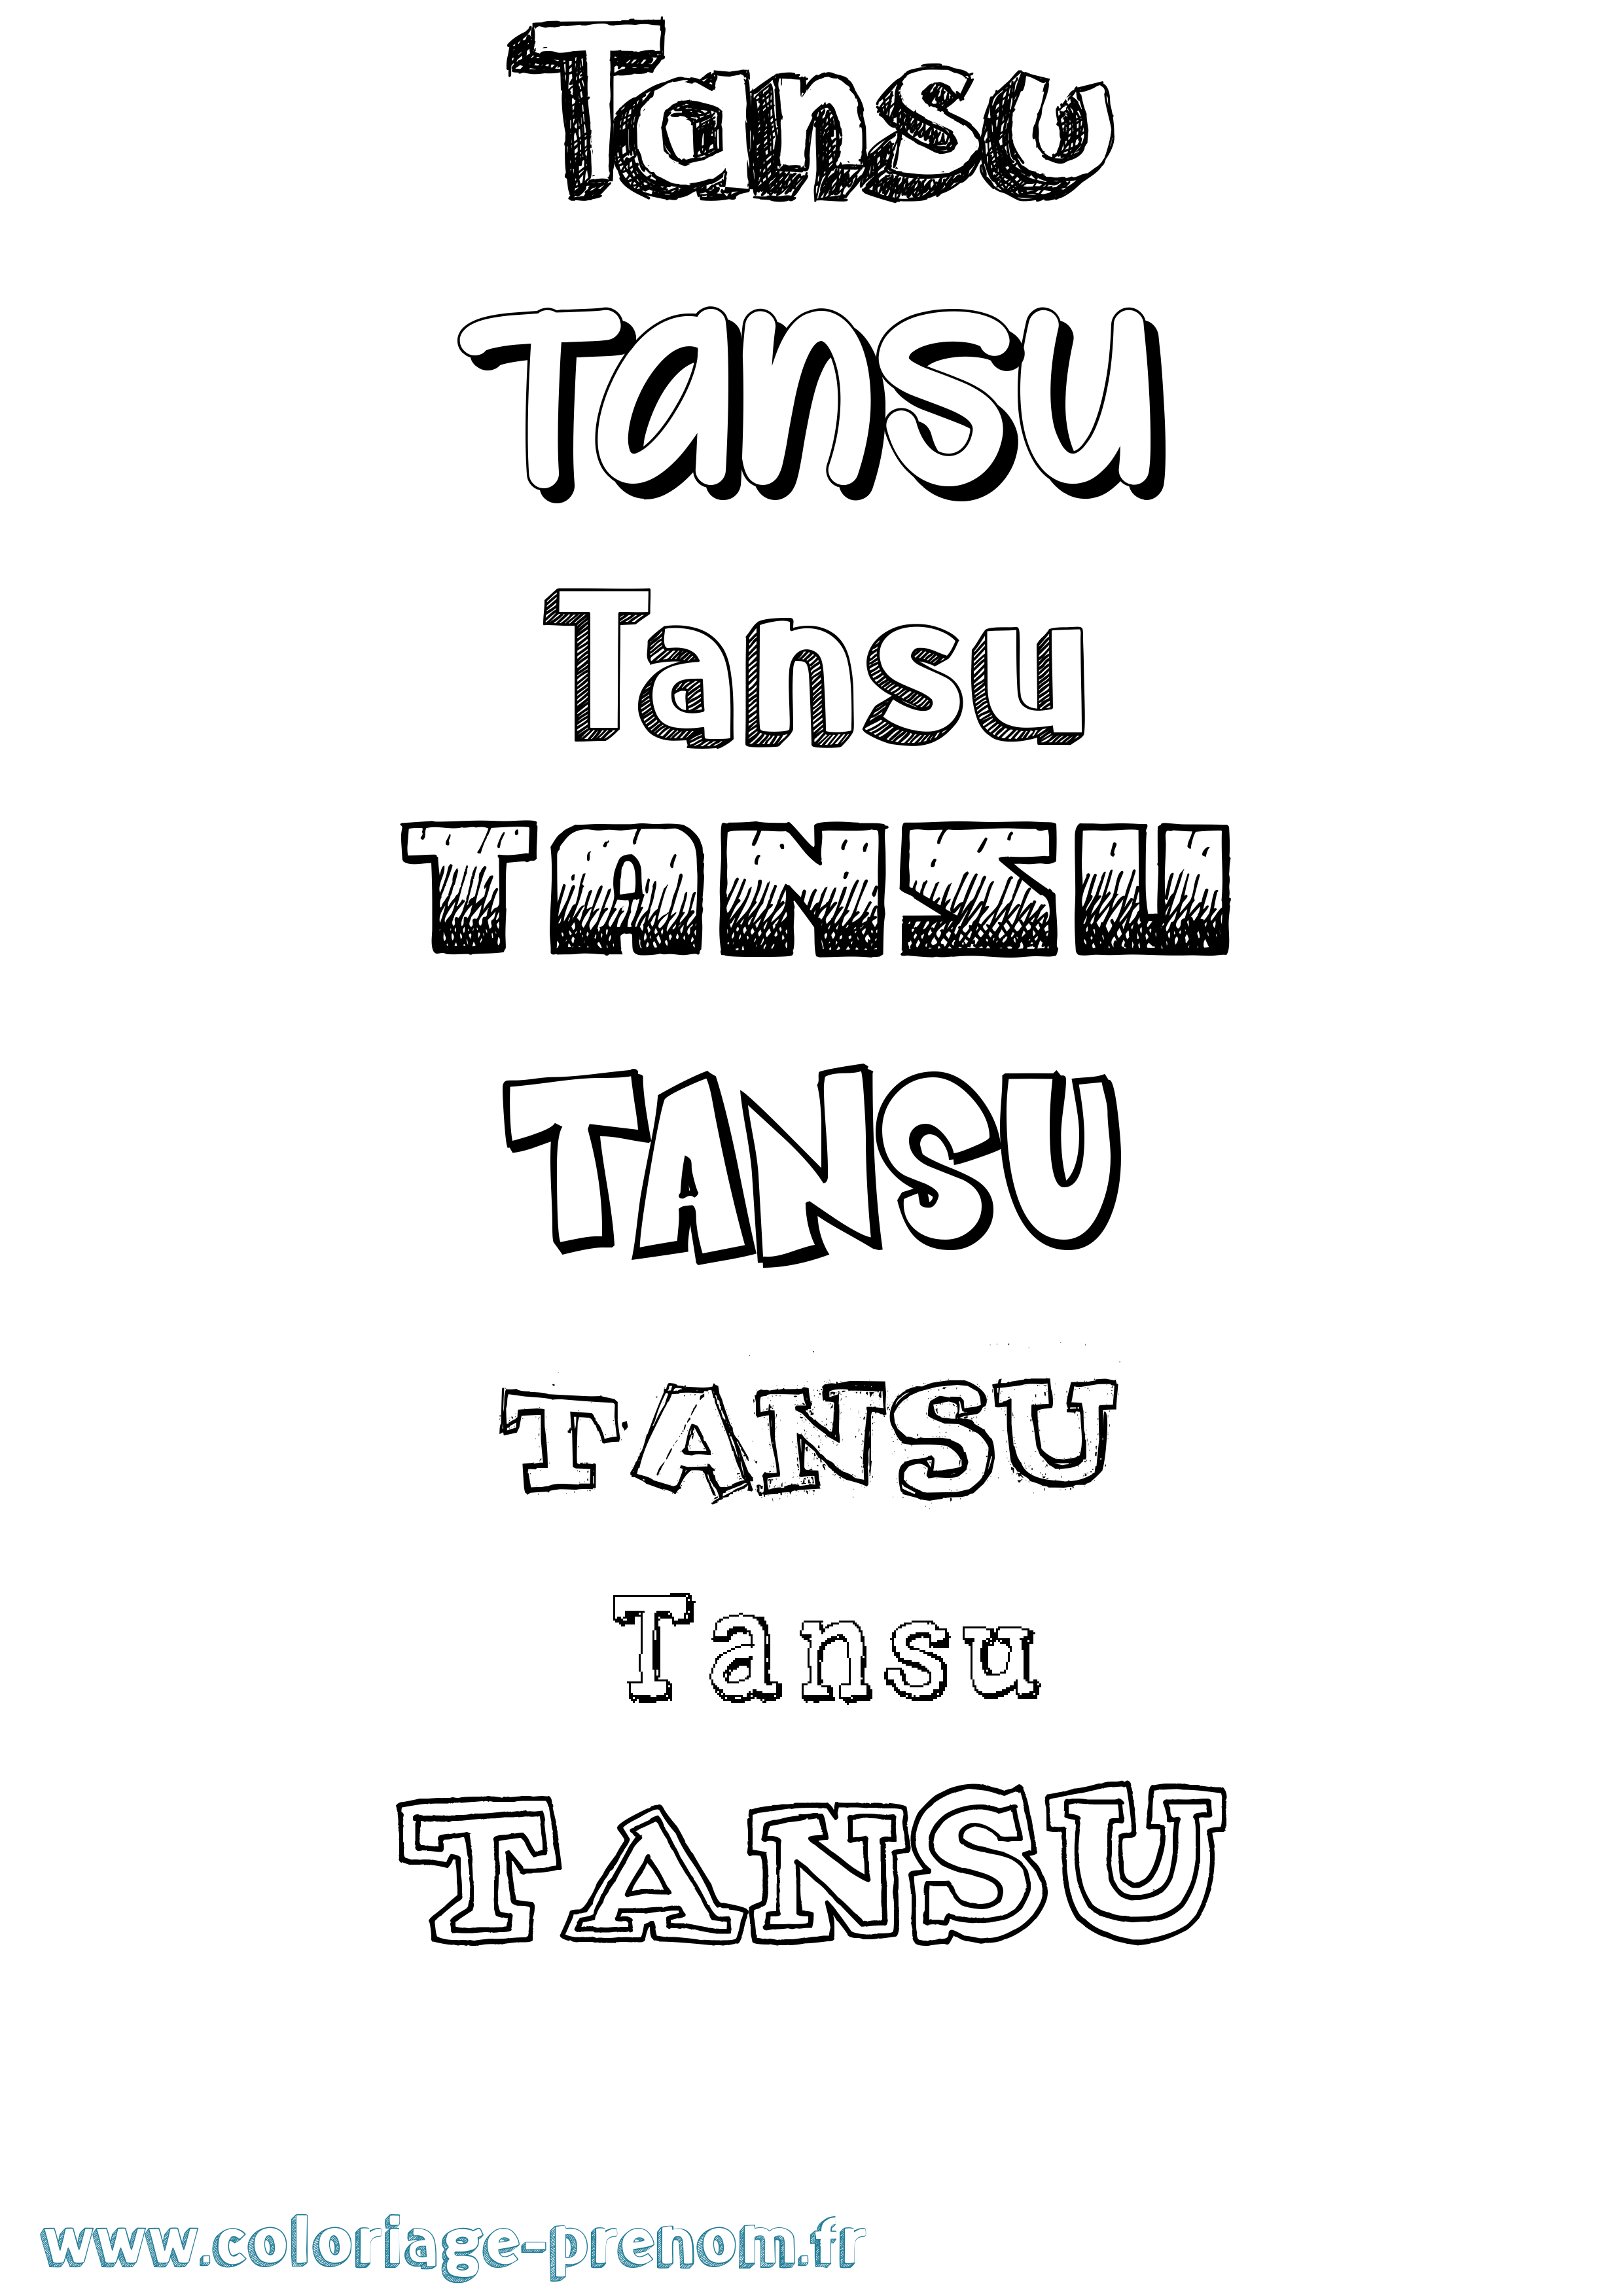 Coloriage prénom Tansu Dessiné